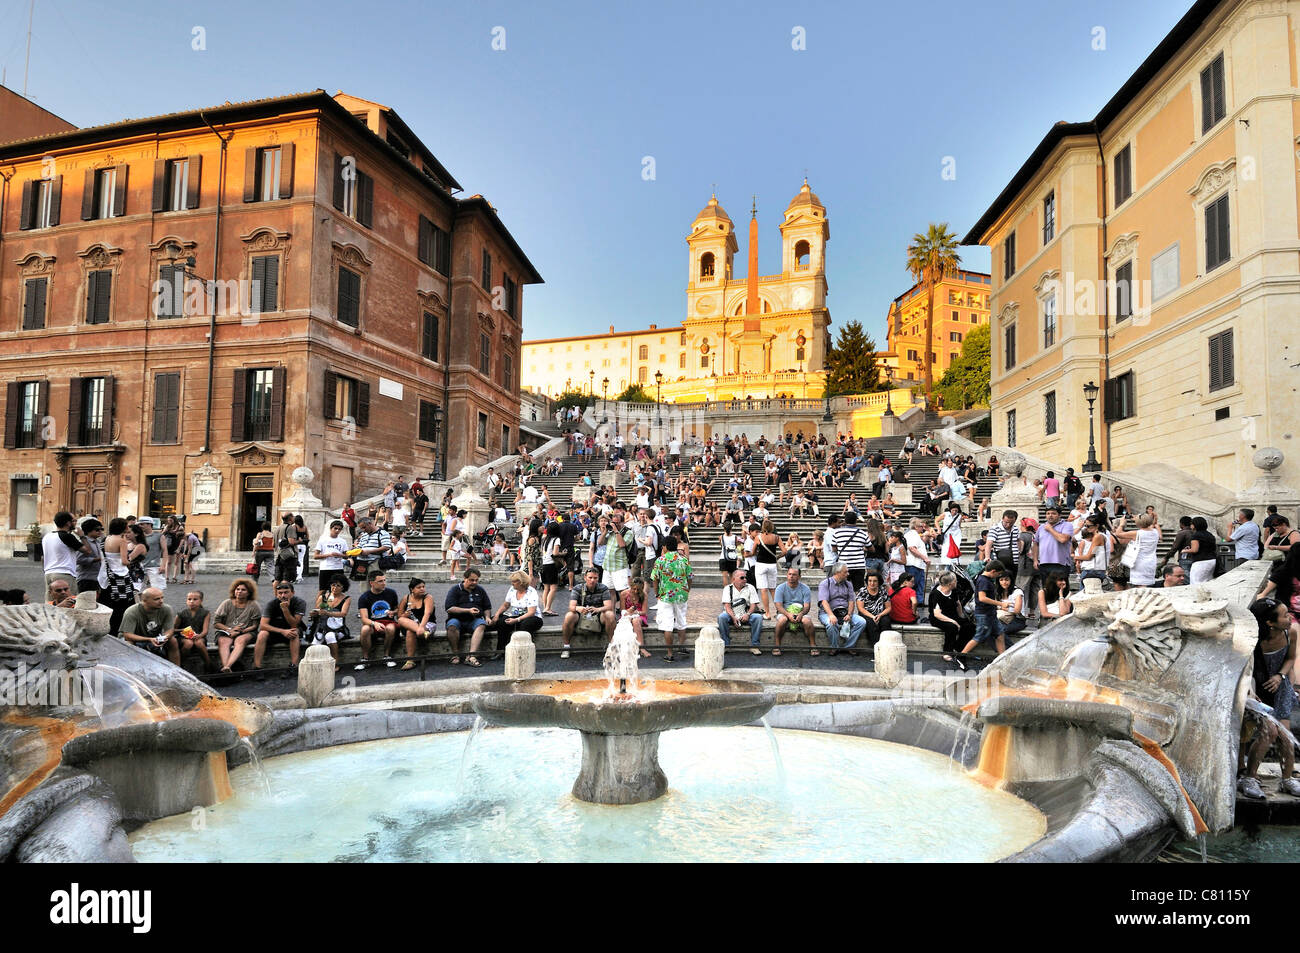 Fontana della Barcaccia fountain et les touristes sur l'Espagne, la Piazza di Spagna, Rome, Italie, Europe Banque D'Images